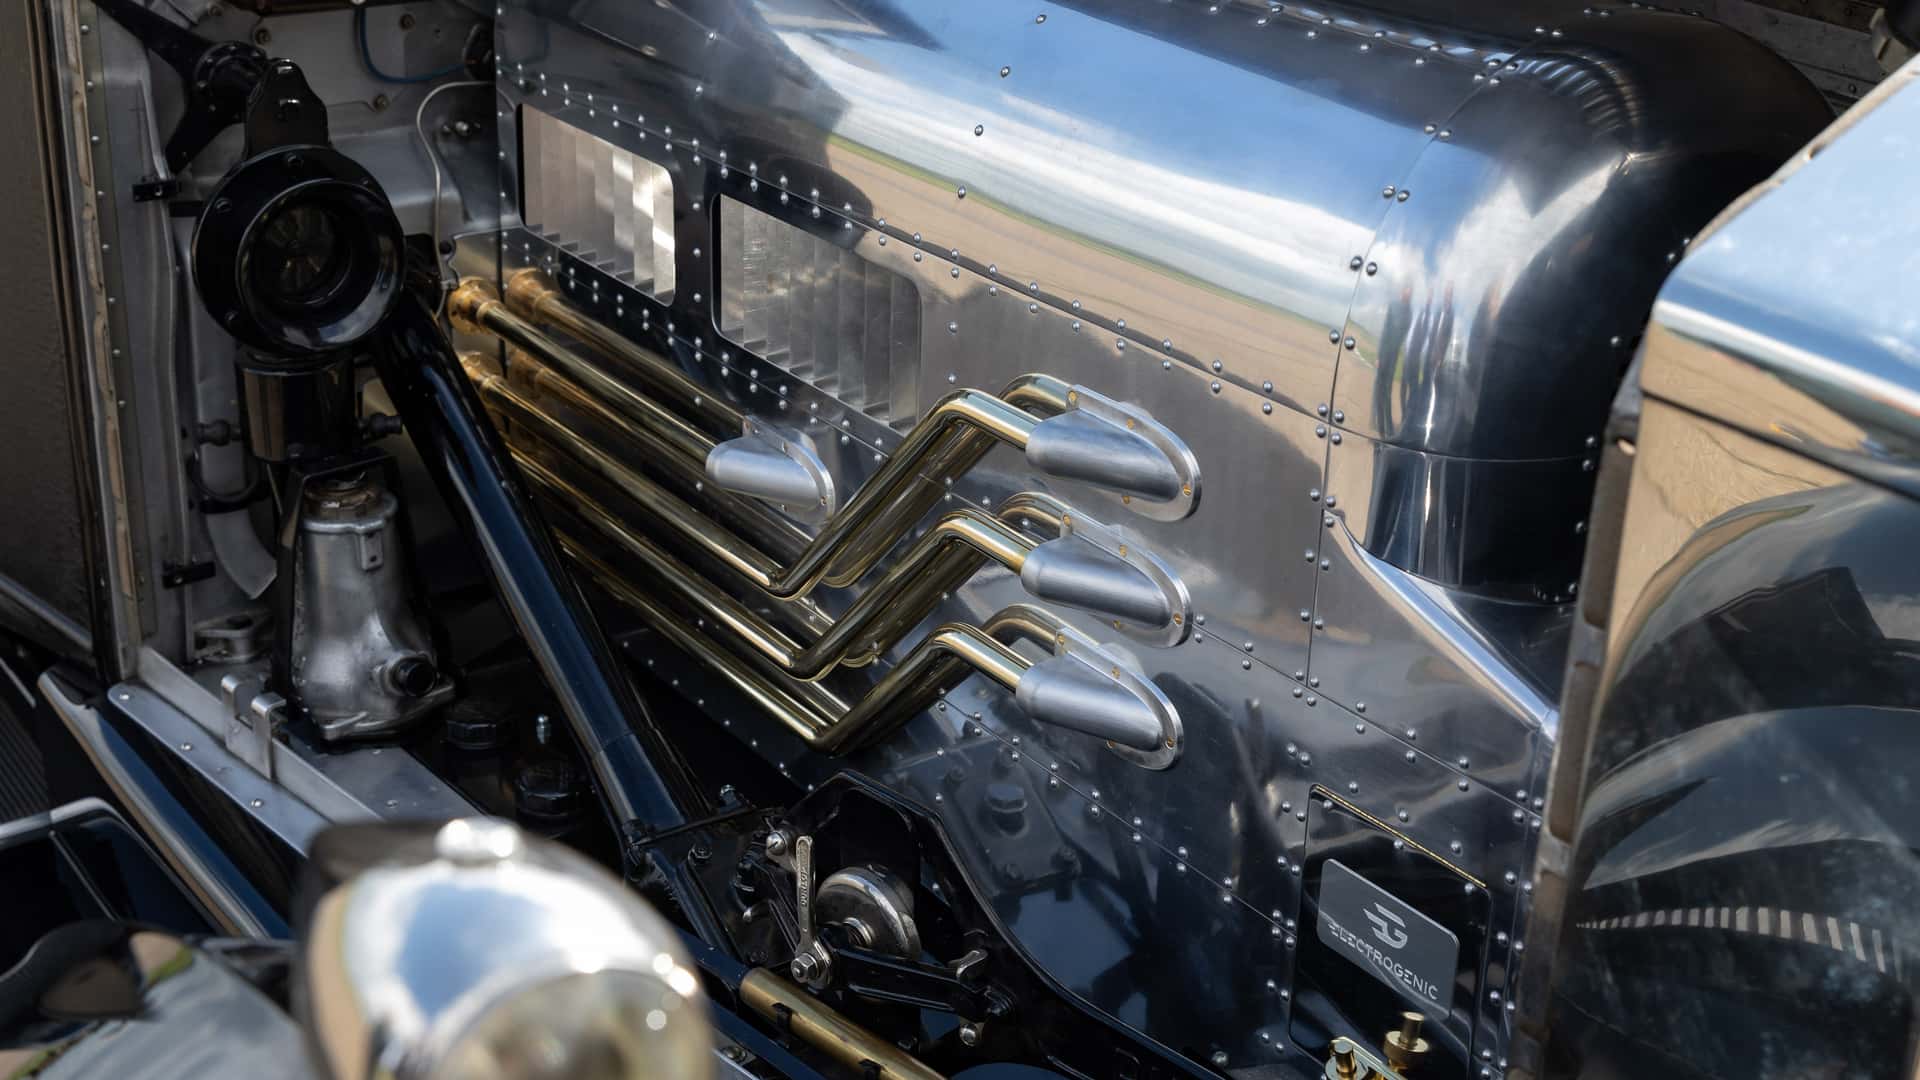 1929 rolls-royce phantom ii ev conversion by electrogenic revealed with 201 hp